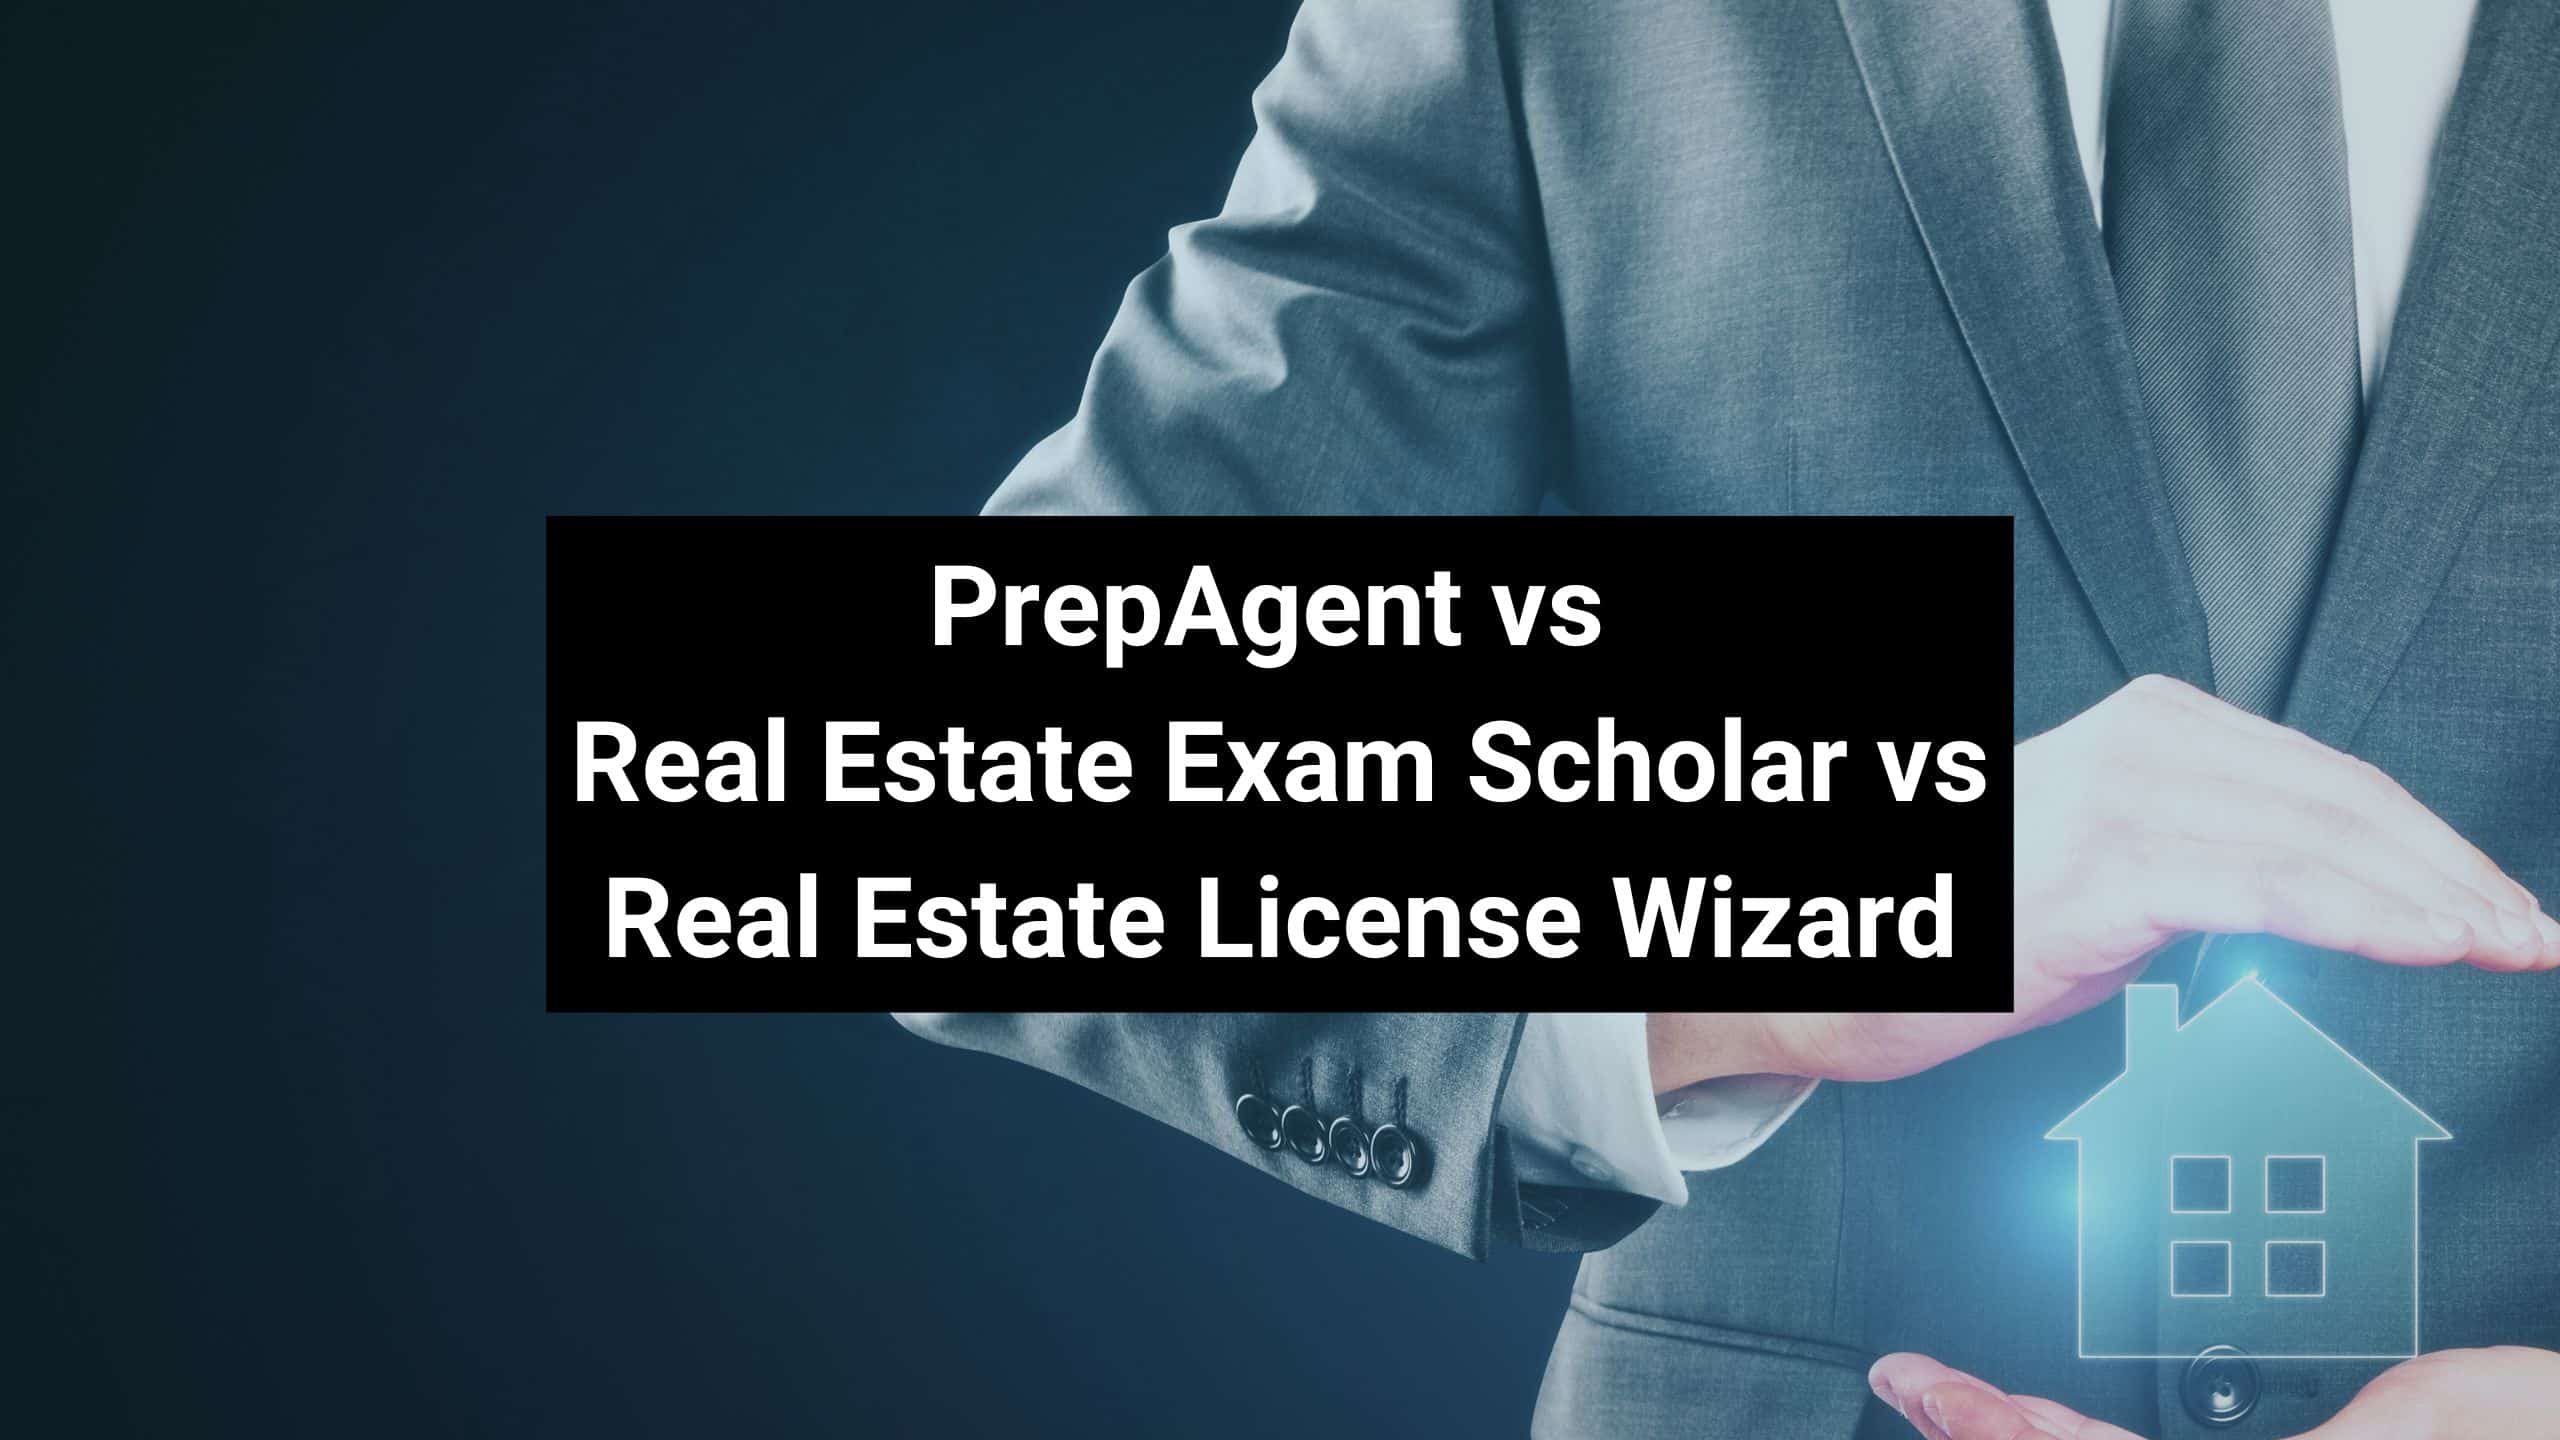 PrepAgent vs Real Estate Exam Scholar vs Real Estate License Wizard Image